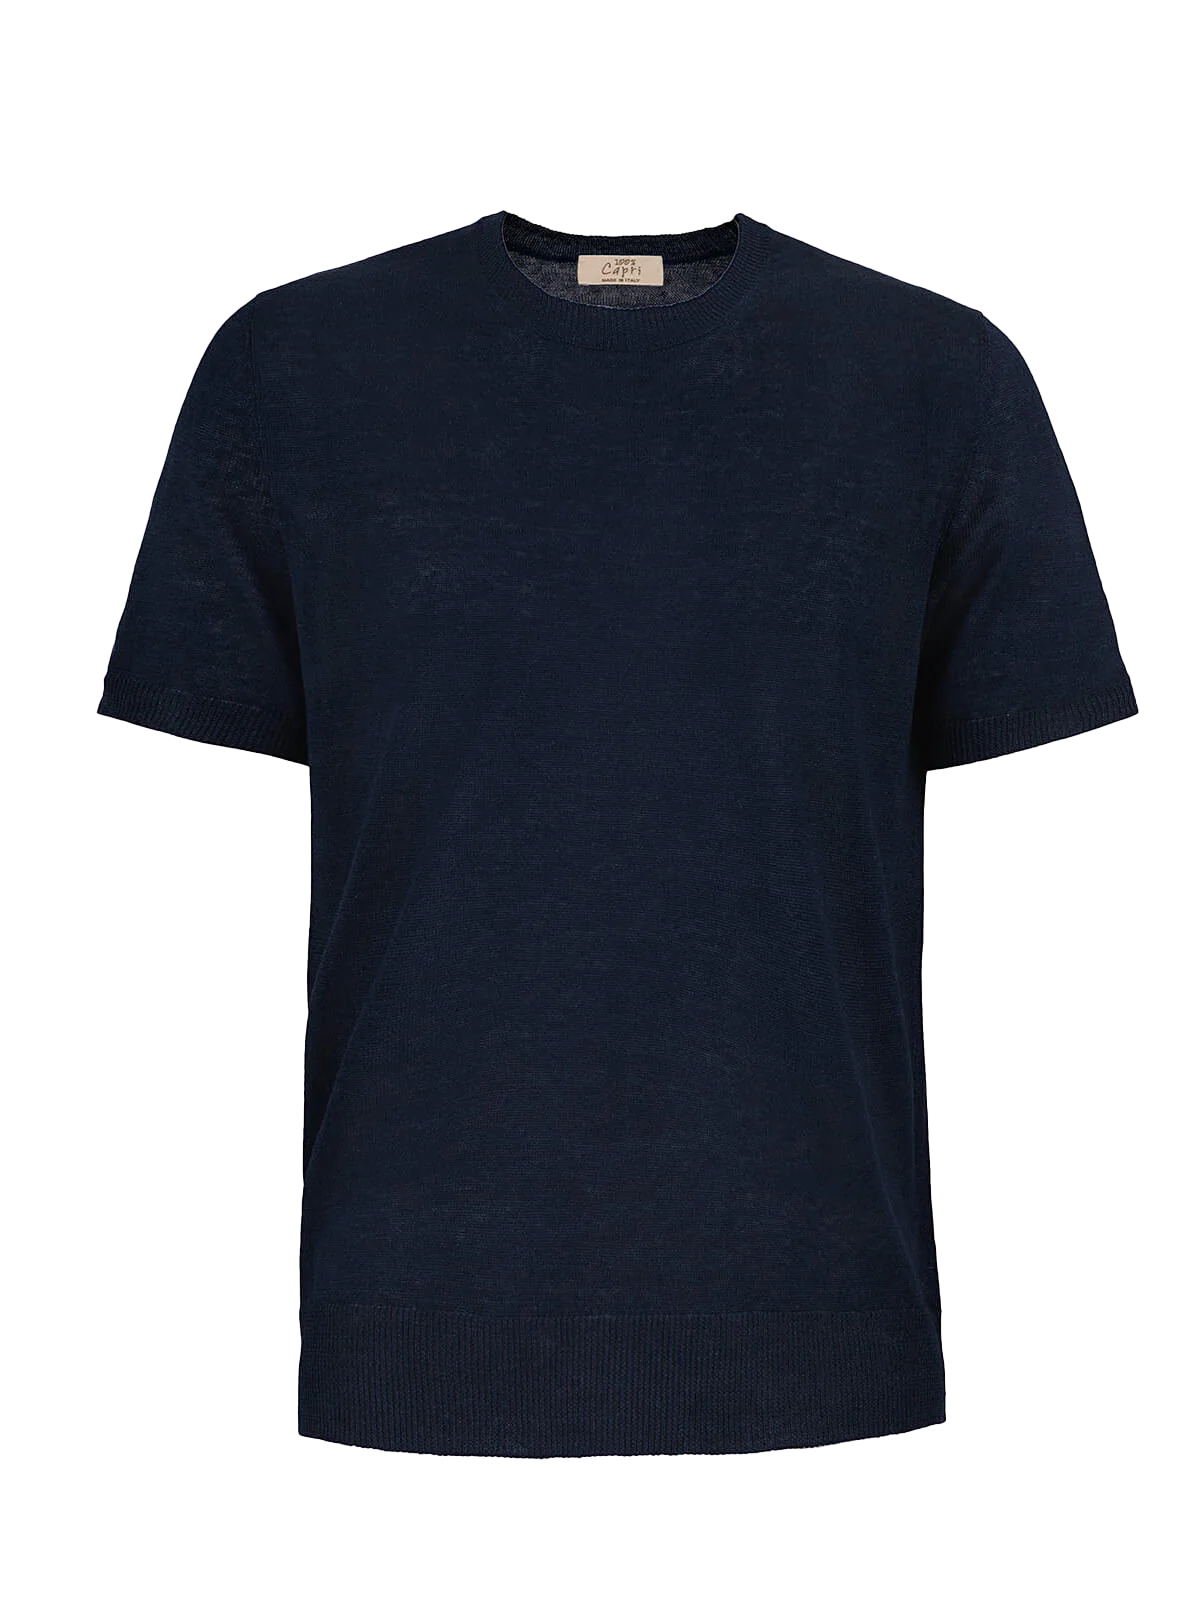 T-Shirt M/C 100% Capri blue linen t-shirt front